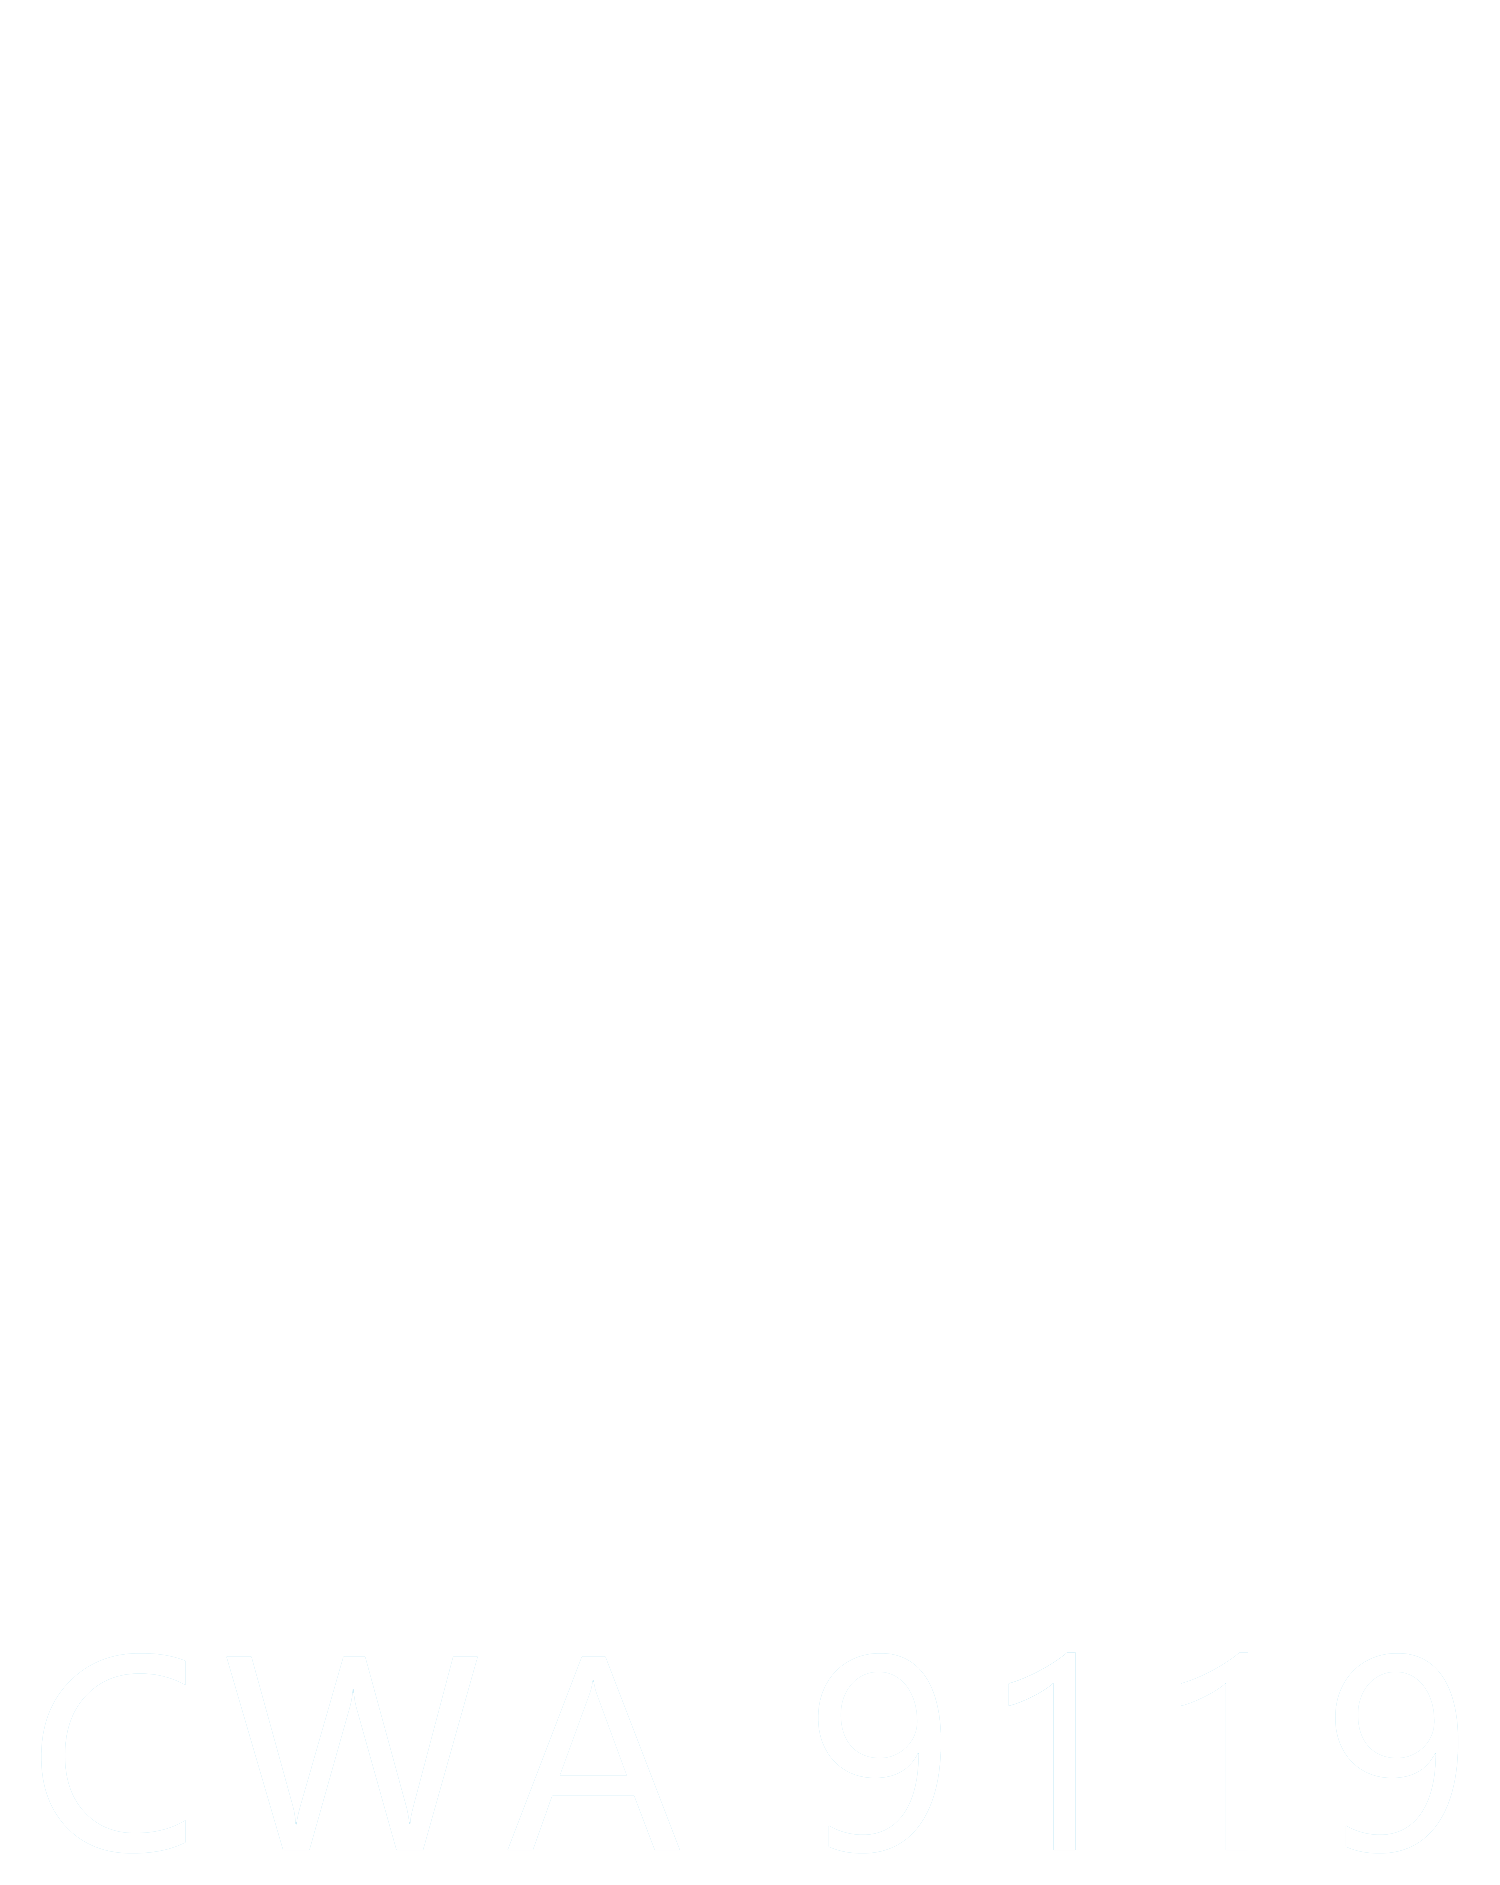 UPTE-CWA 9119